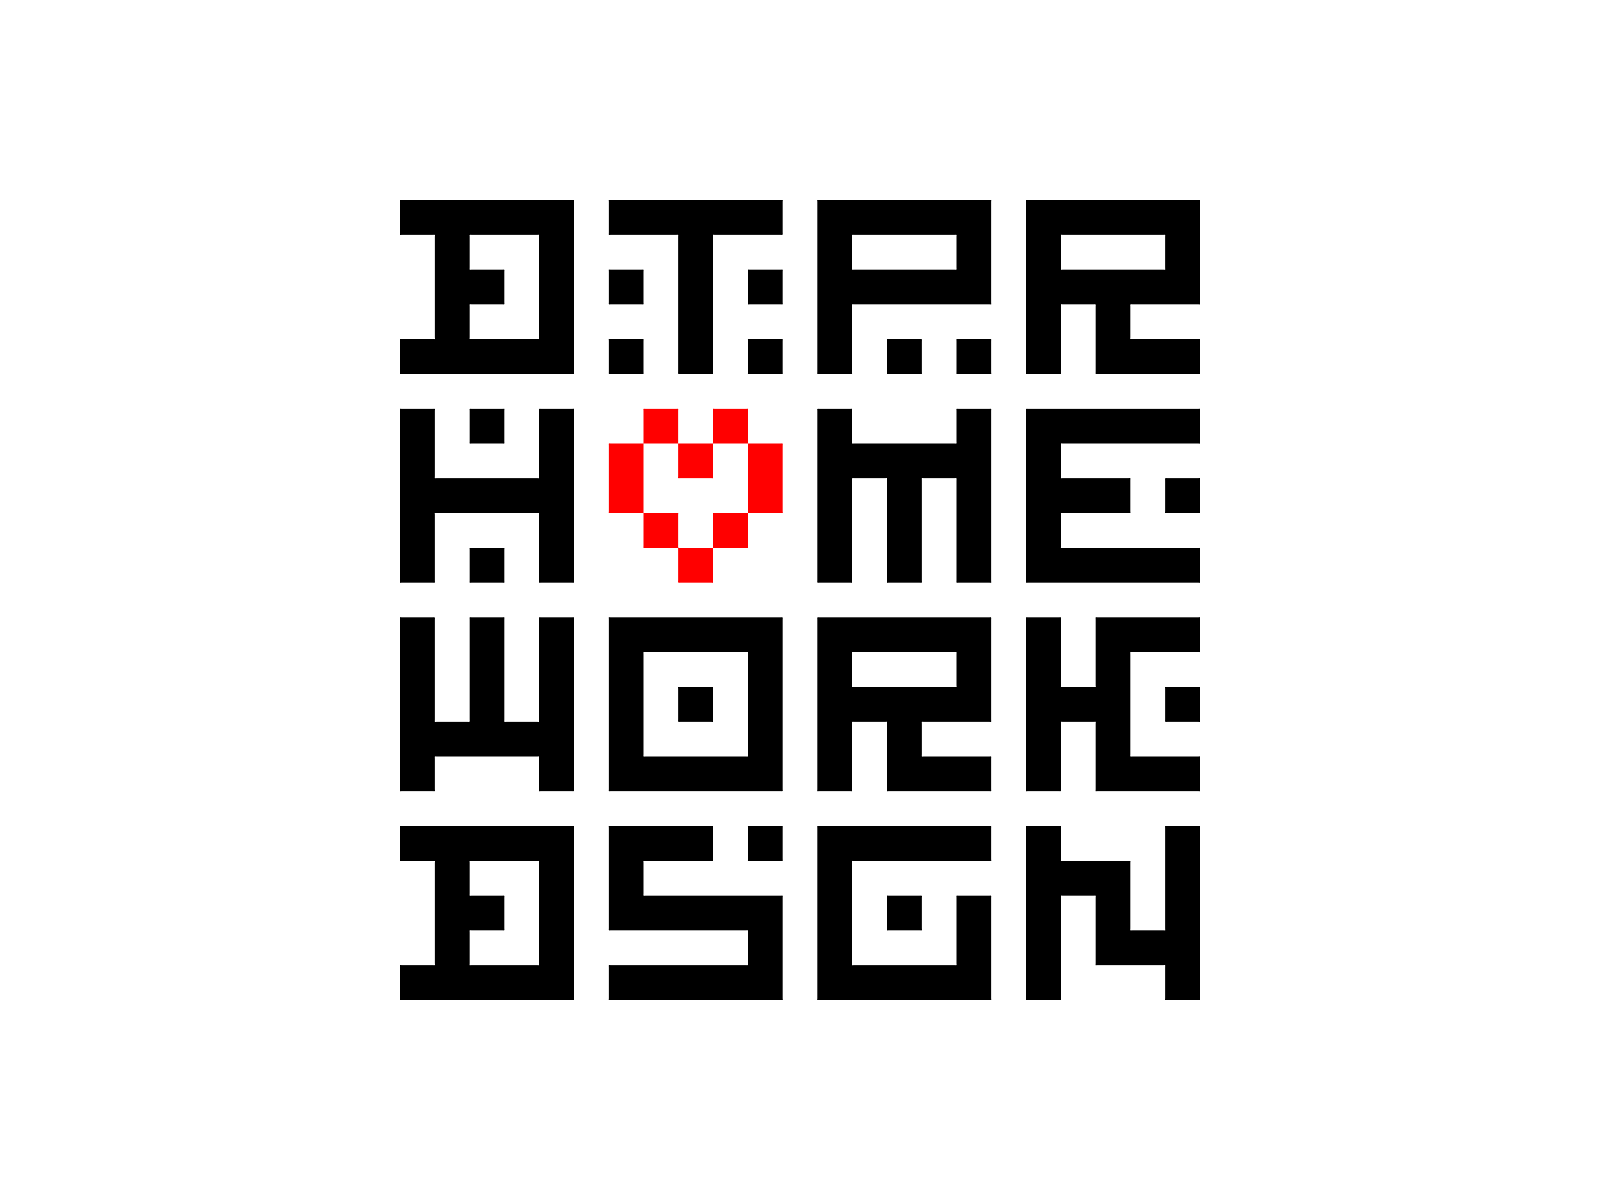 QR код с логотипом